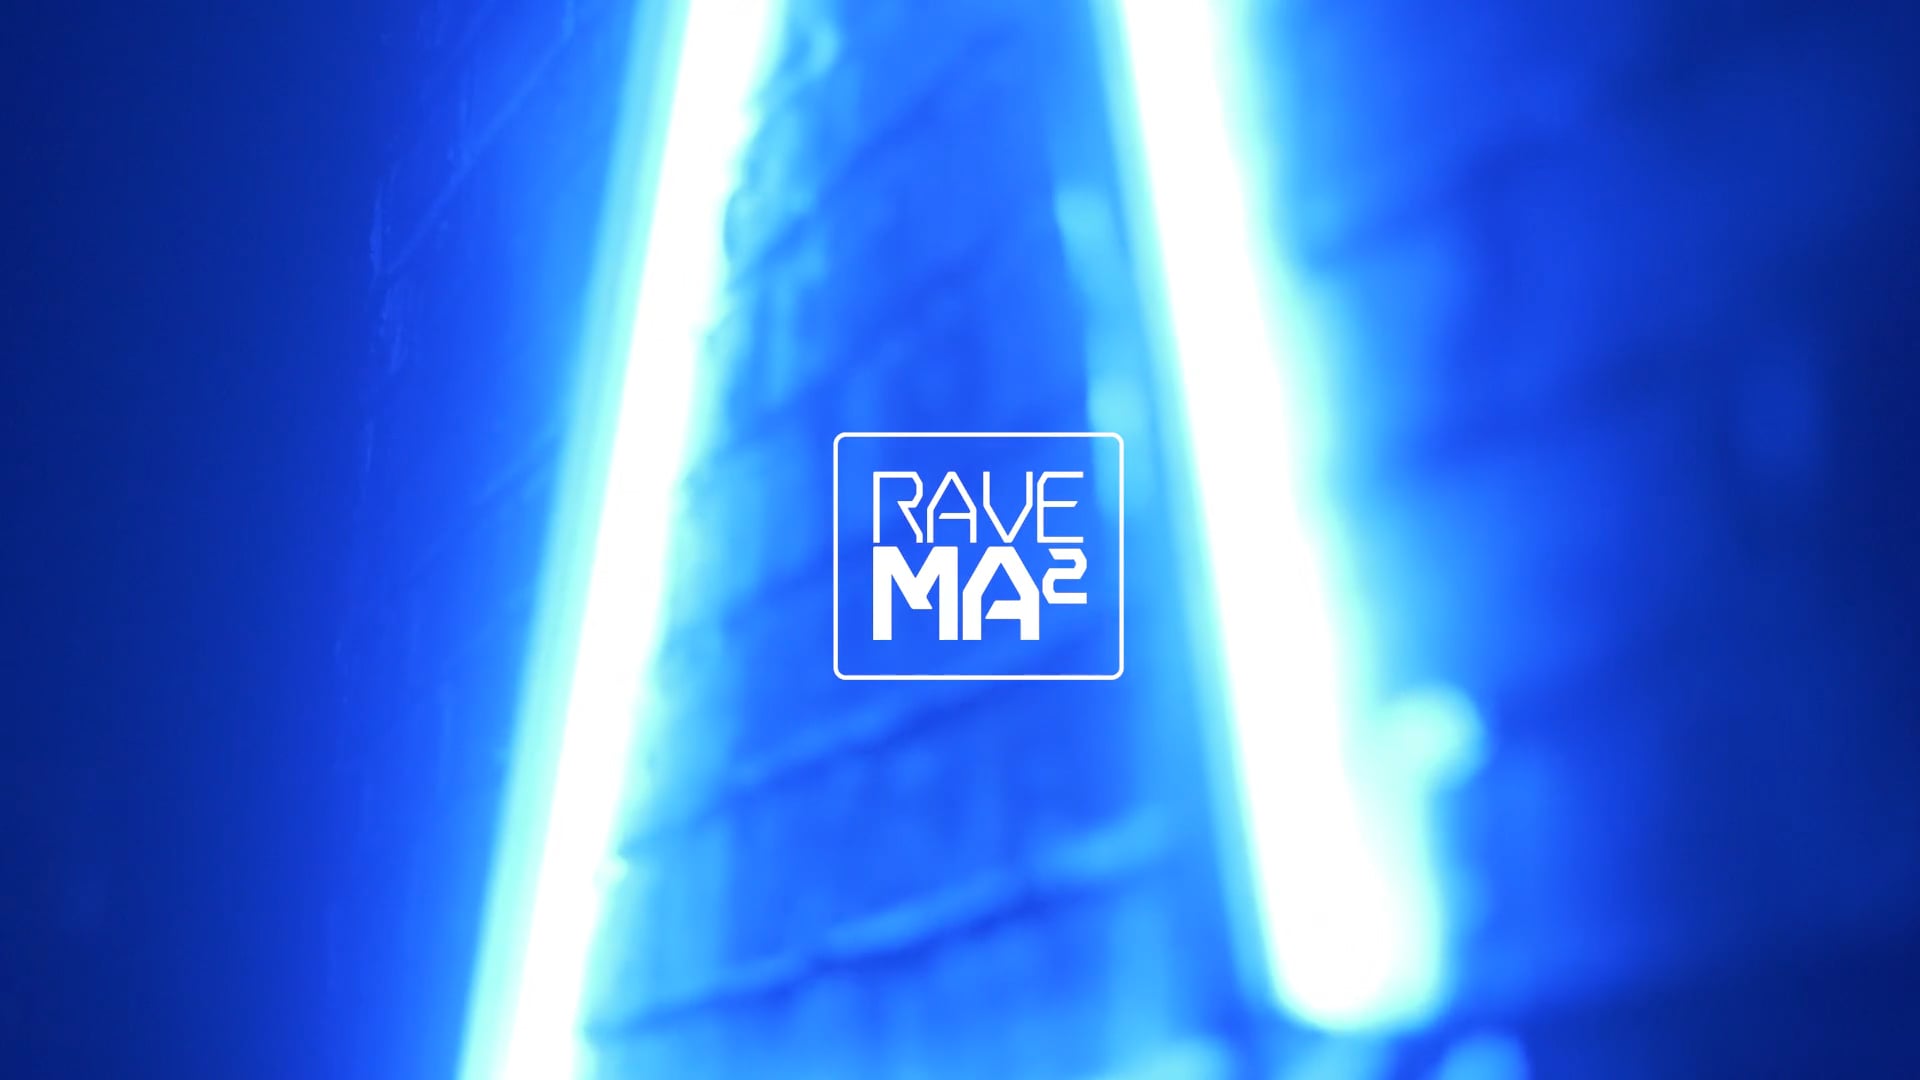 RAVE MA² - TRIPLE T